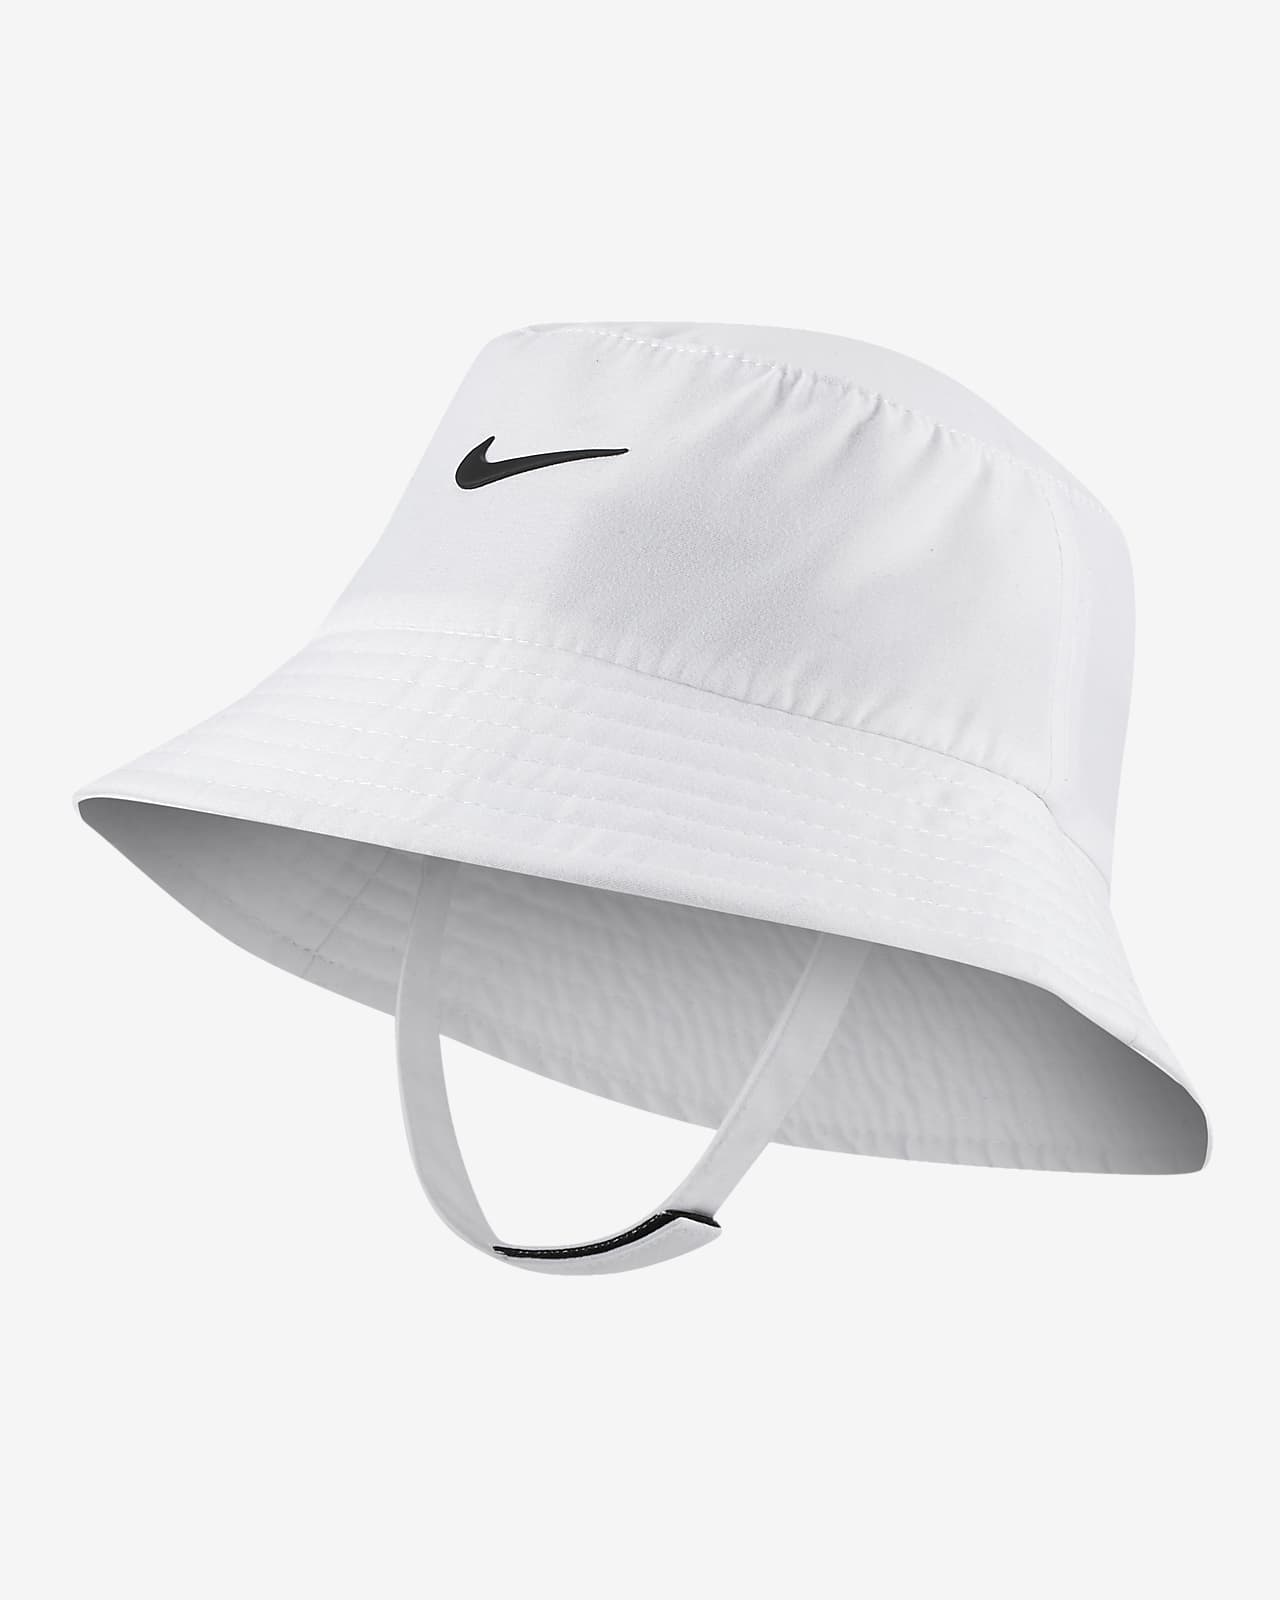 Nike Dri-FIT Baby (12-24M) Bucket Hat, Size: One size, White